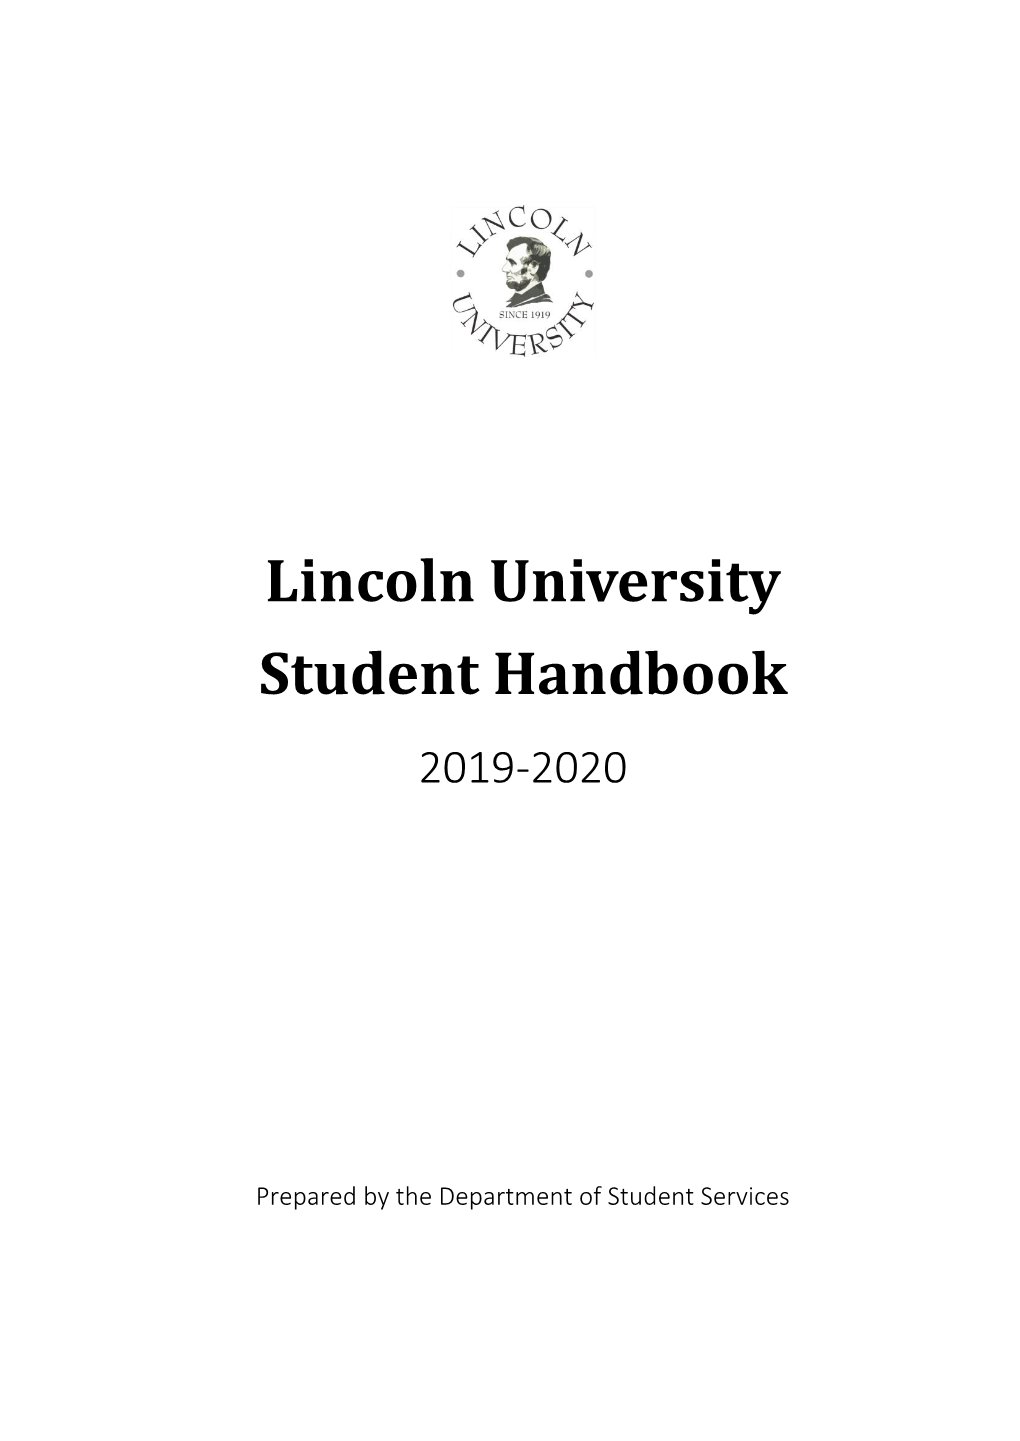 Lincoln University Student Handbook